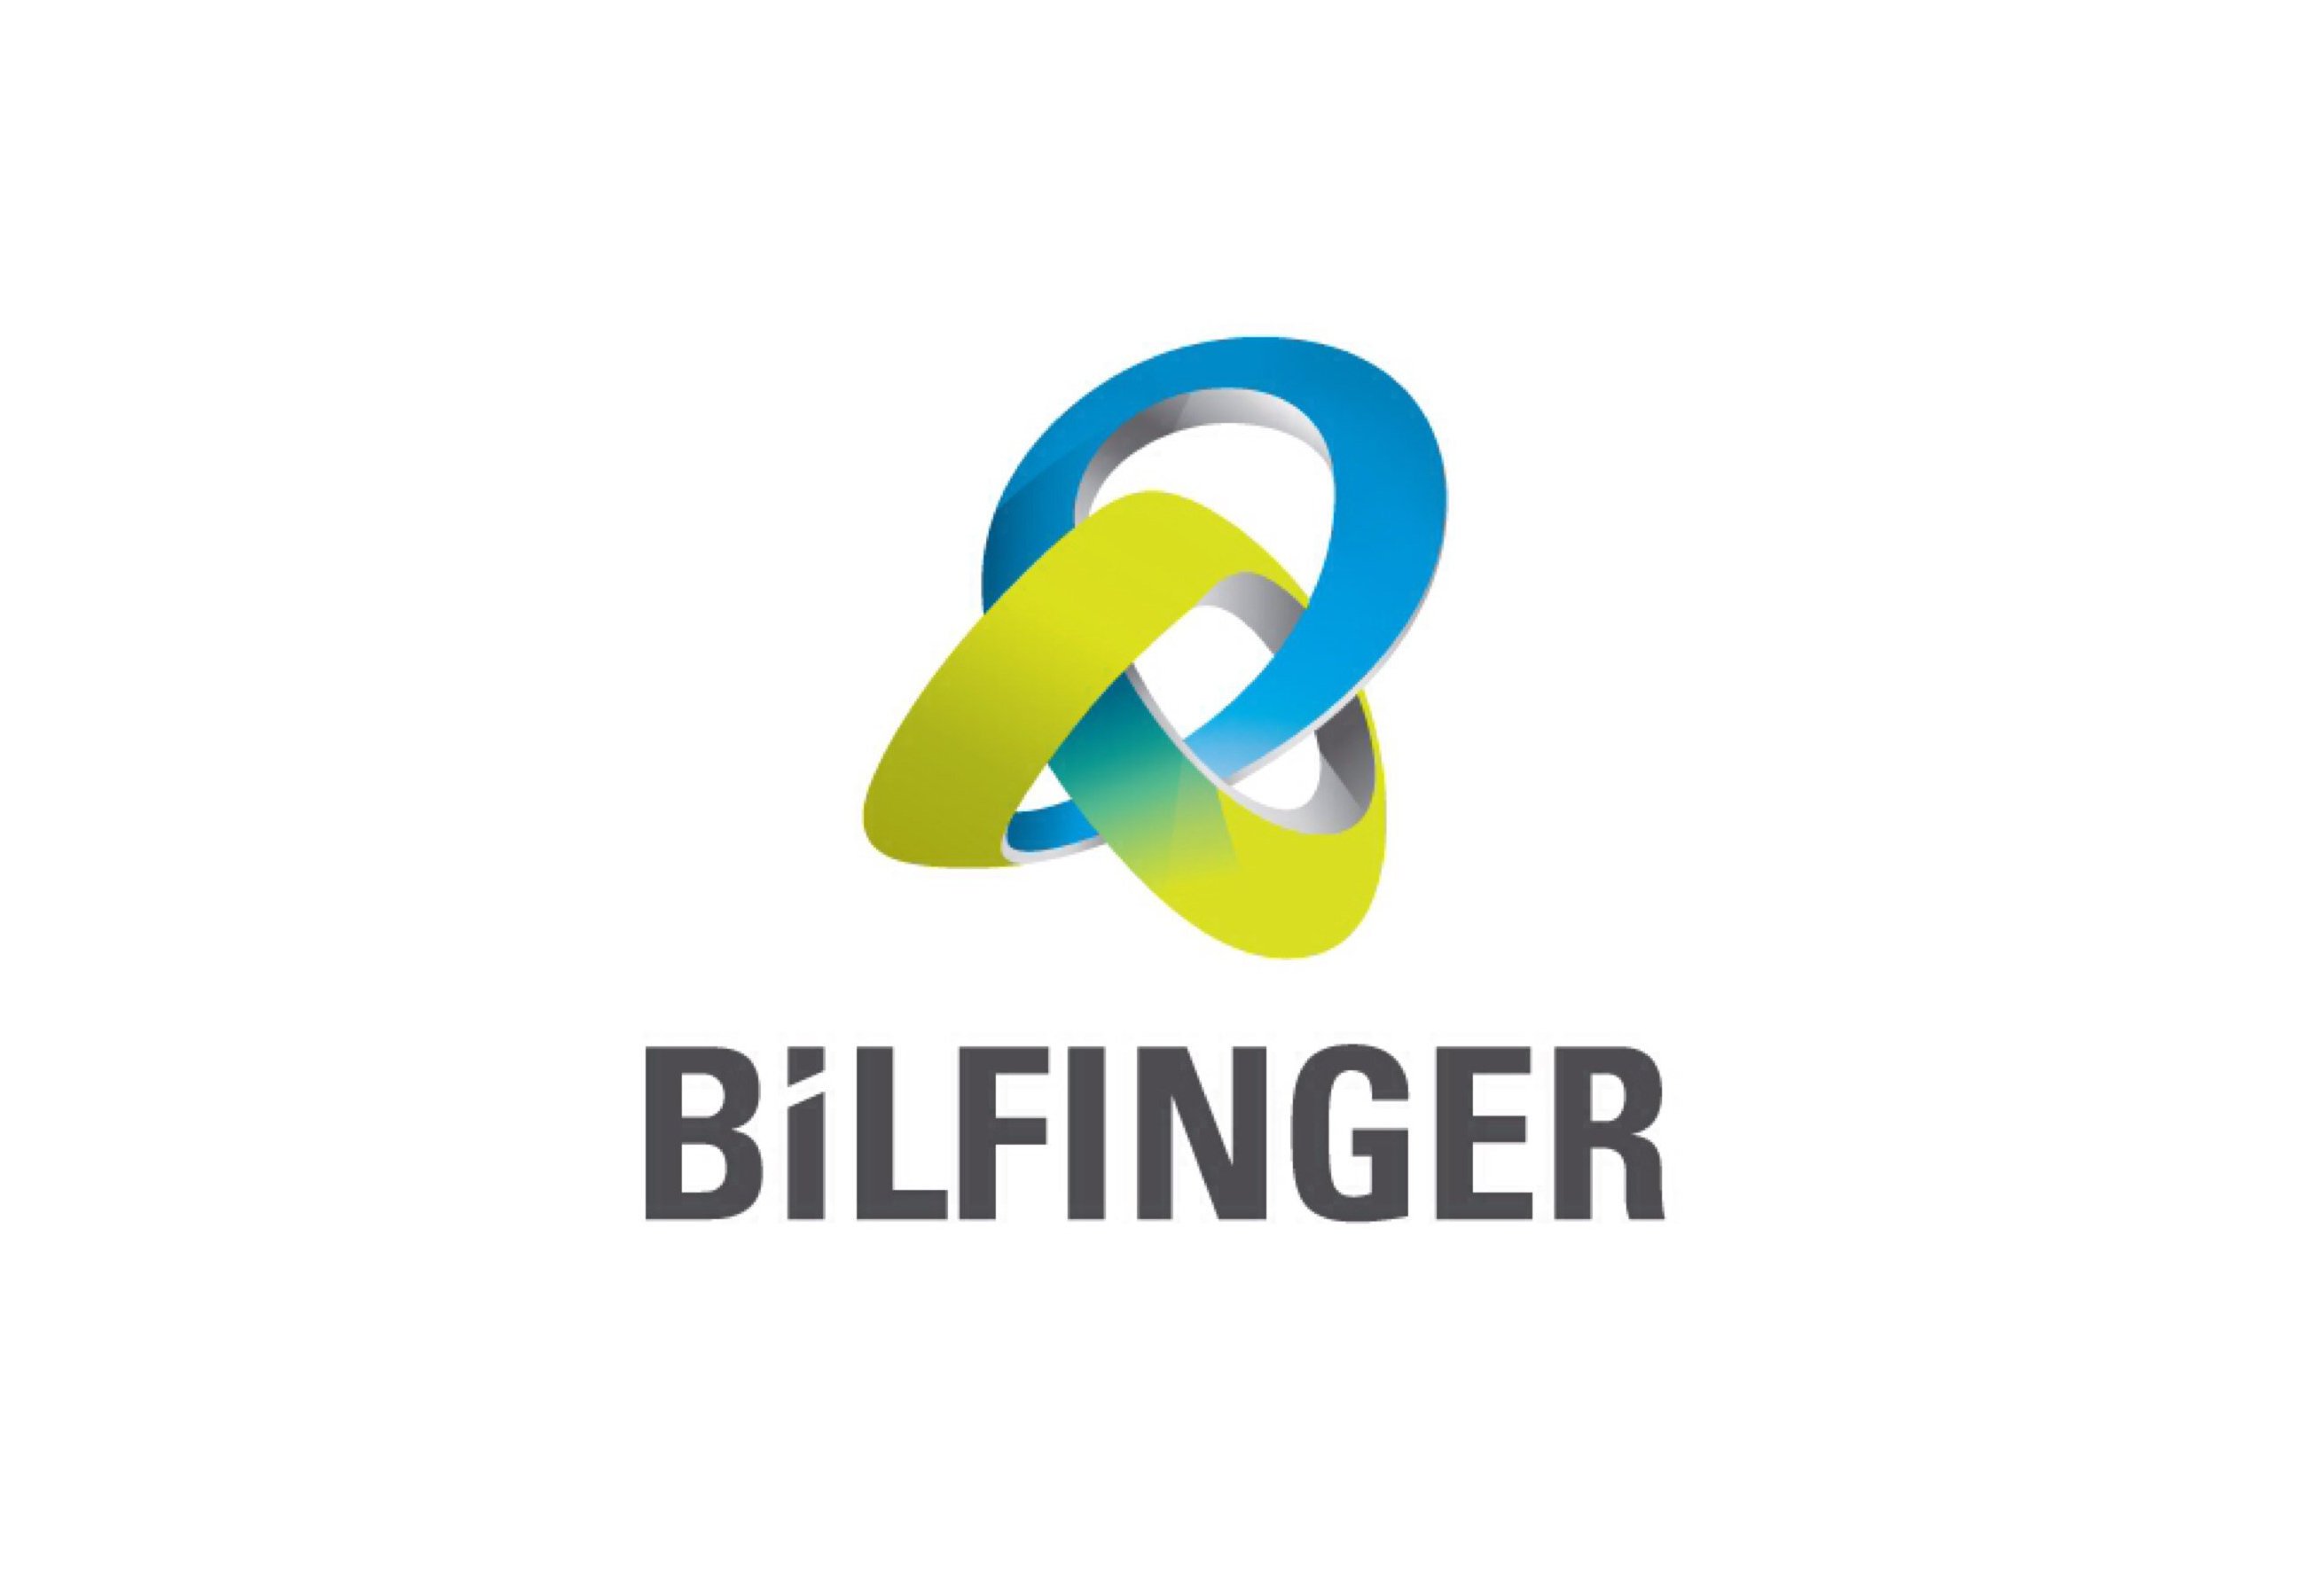 Bilfinger GreyLogix GmbH u201